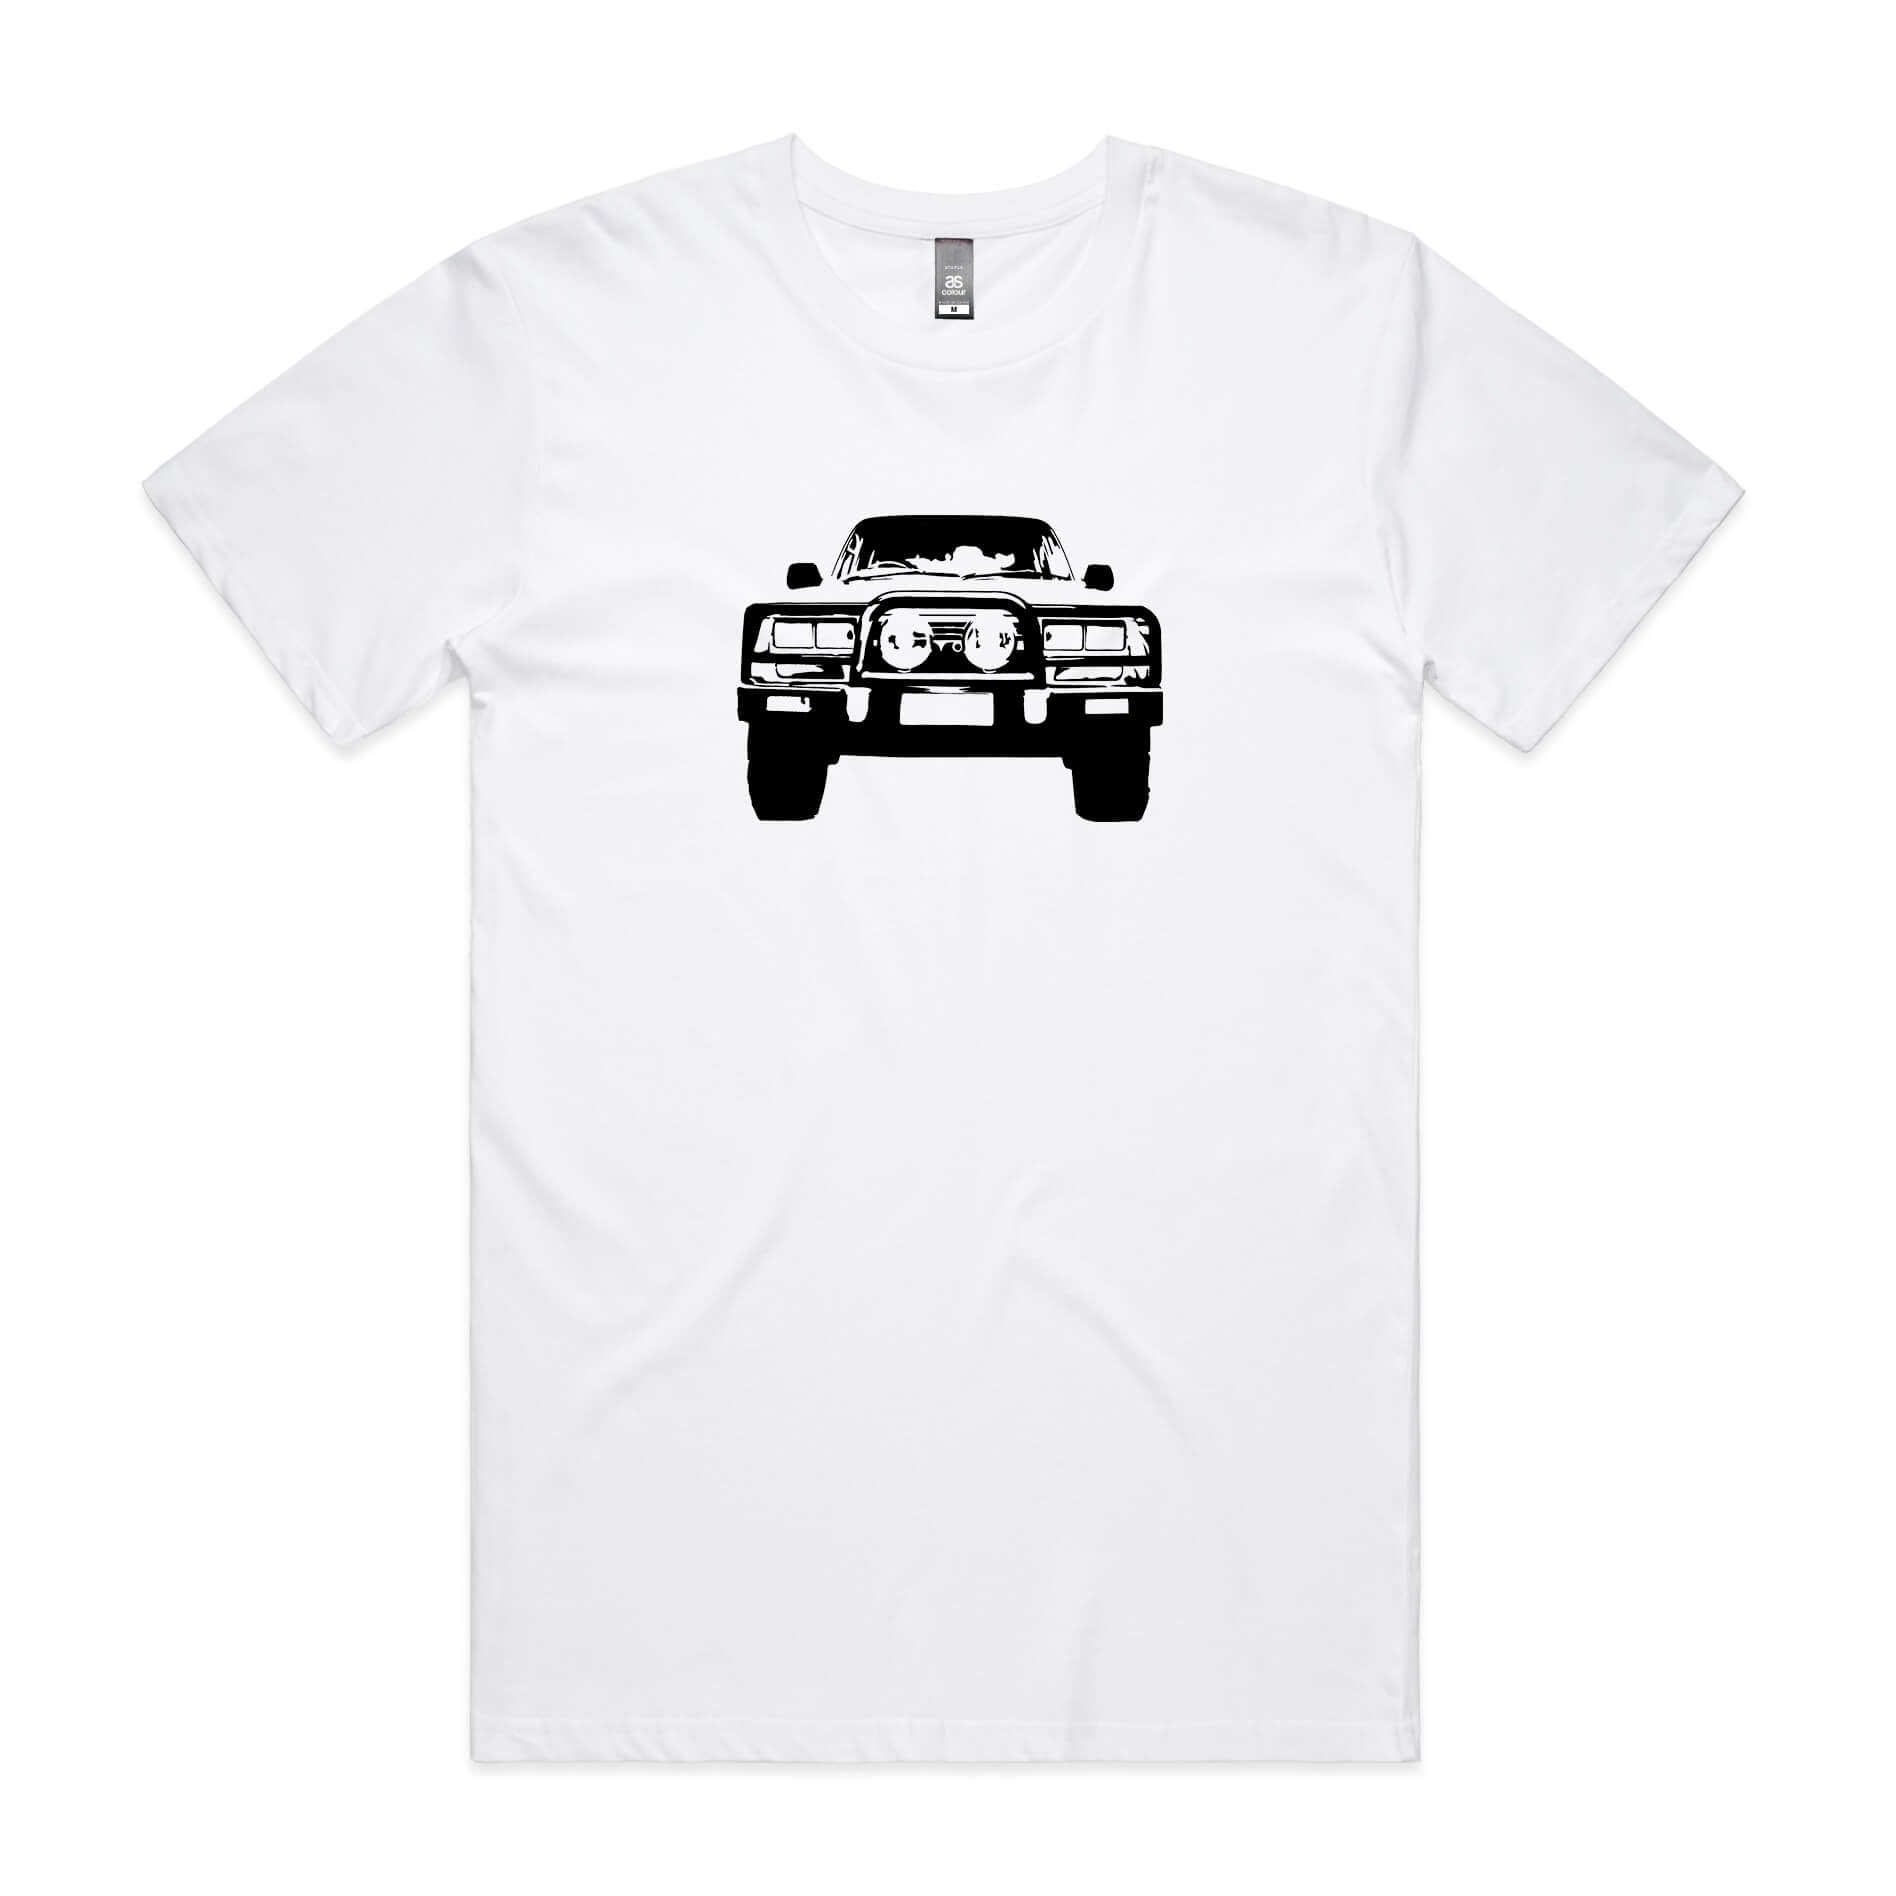 Toyota LandCruiser 80 Series t-shirt in white